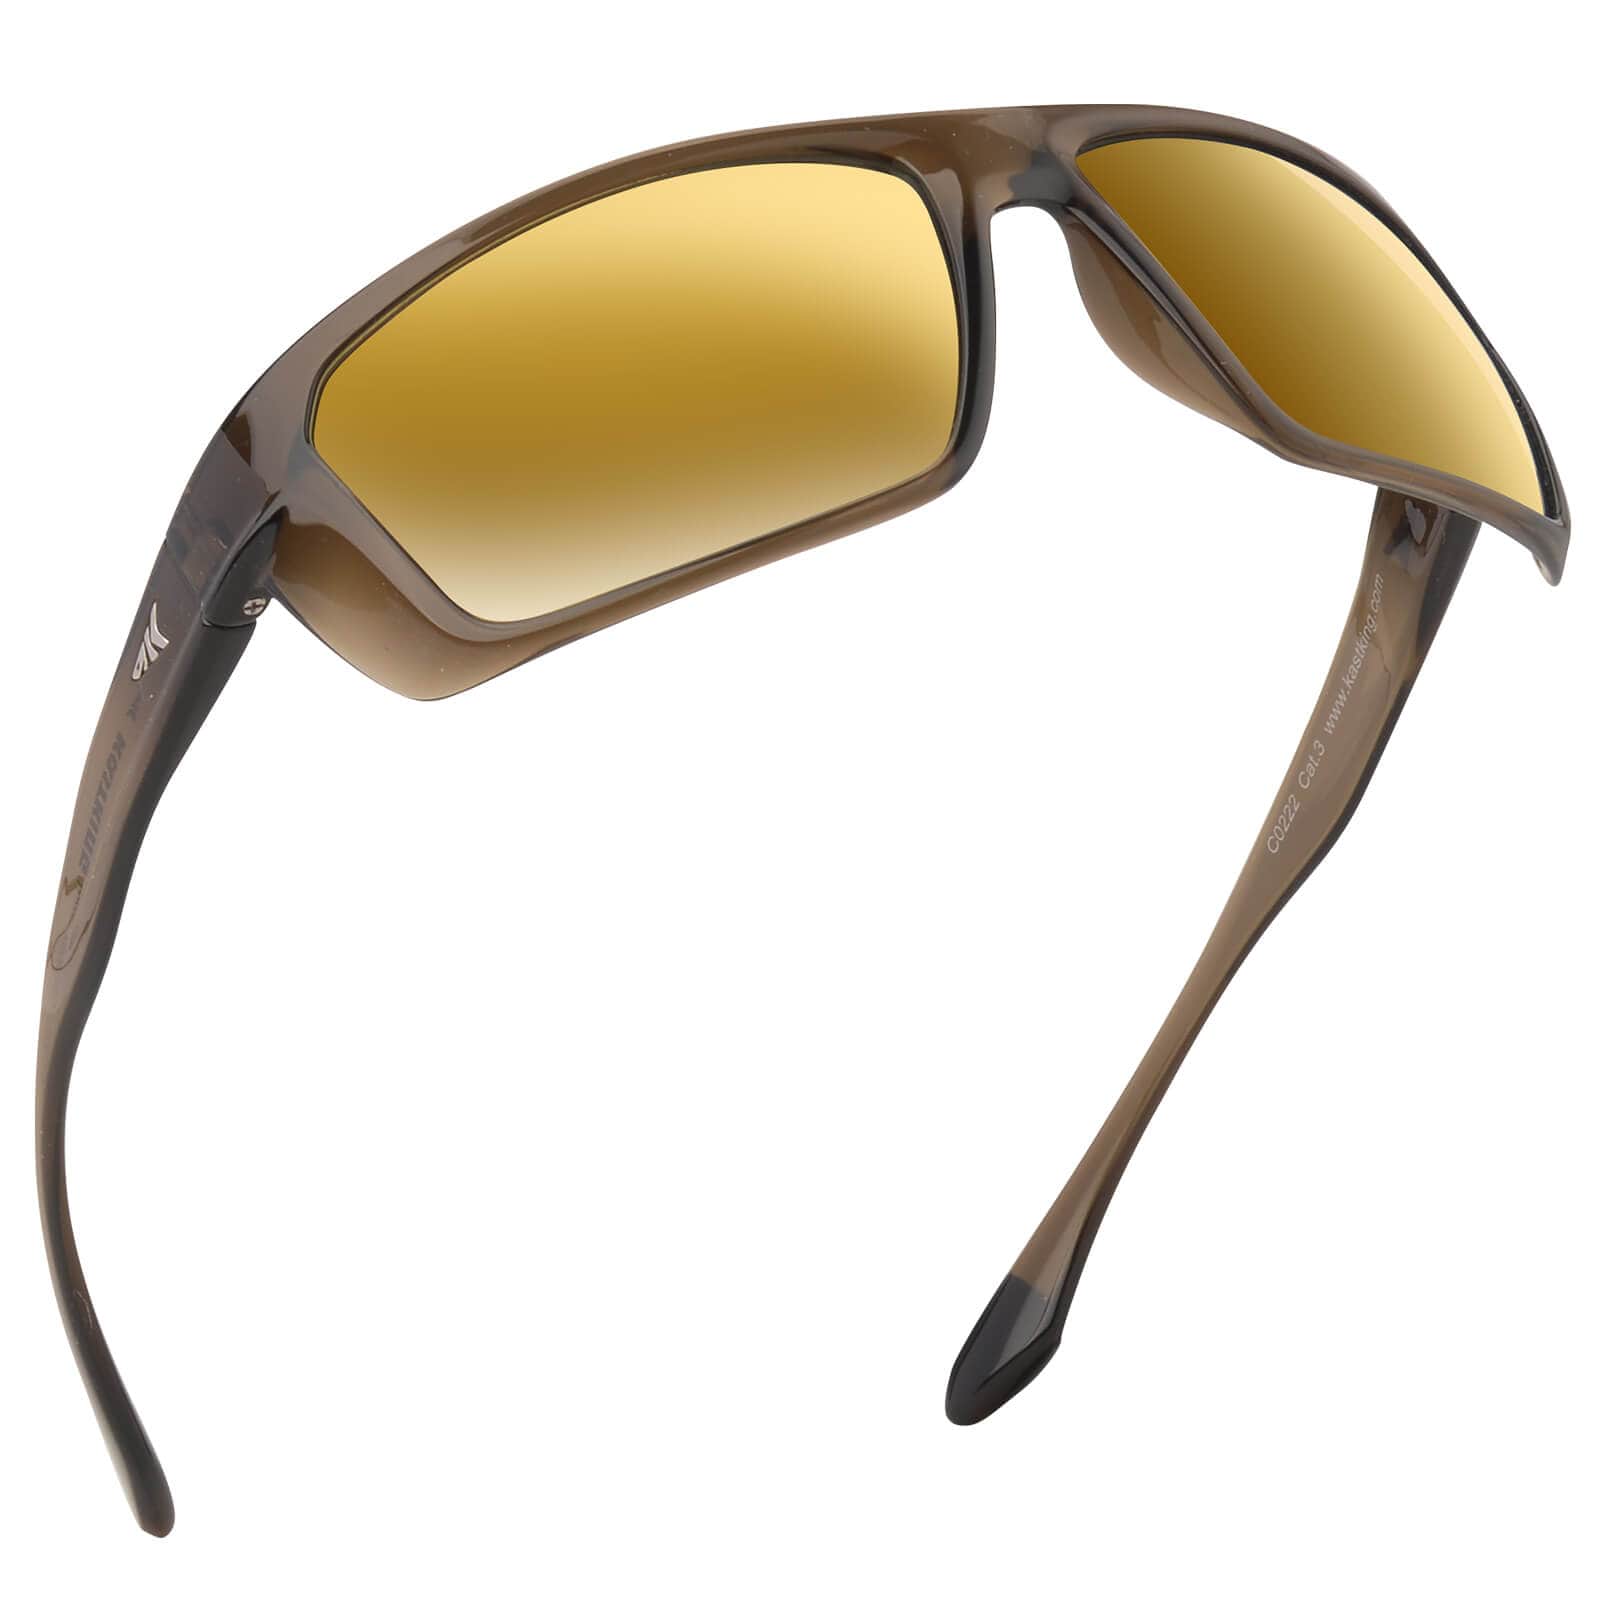 KastKing Huzzah Polarized Sport Sunglasses